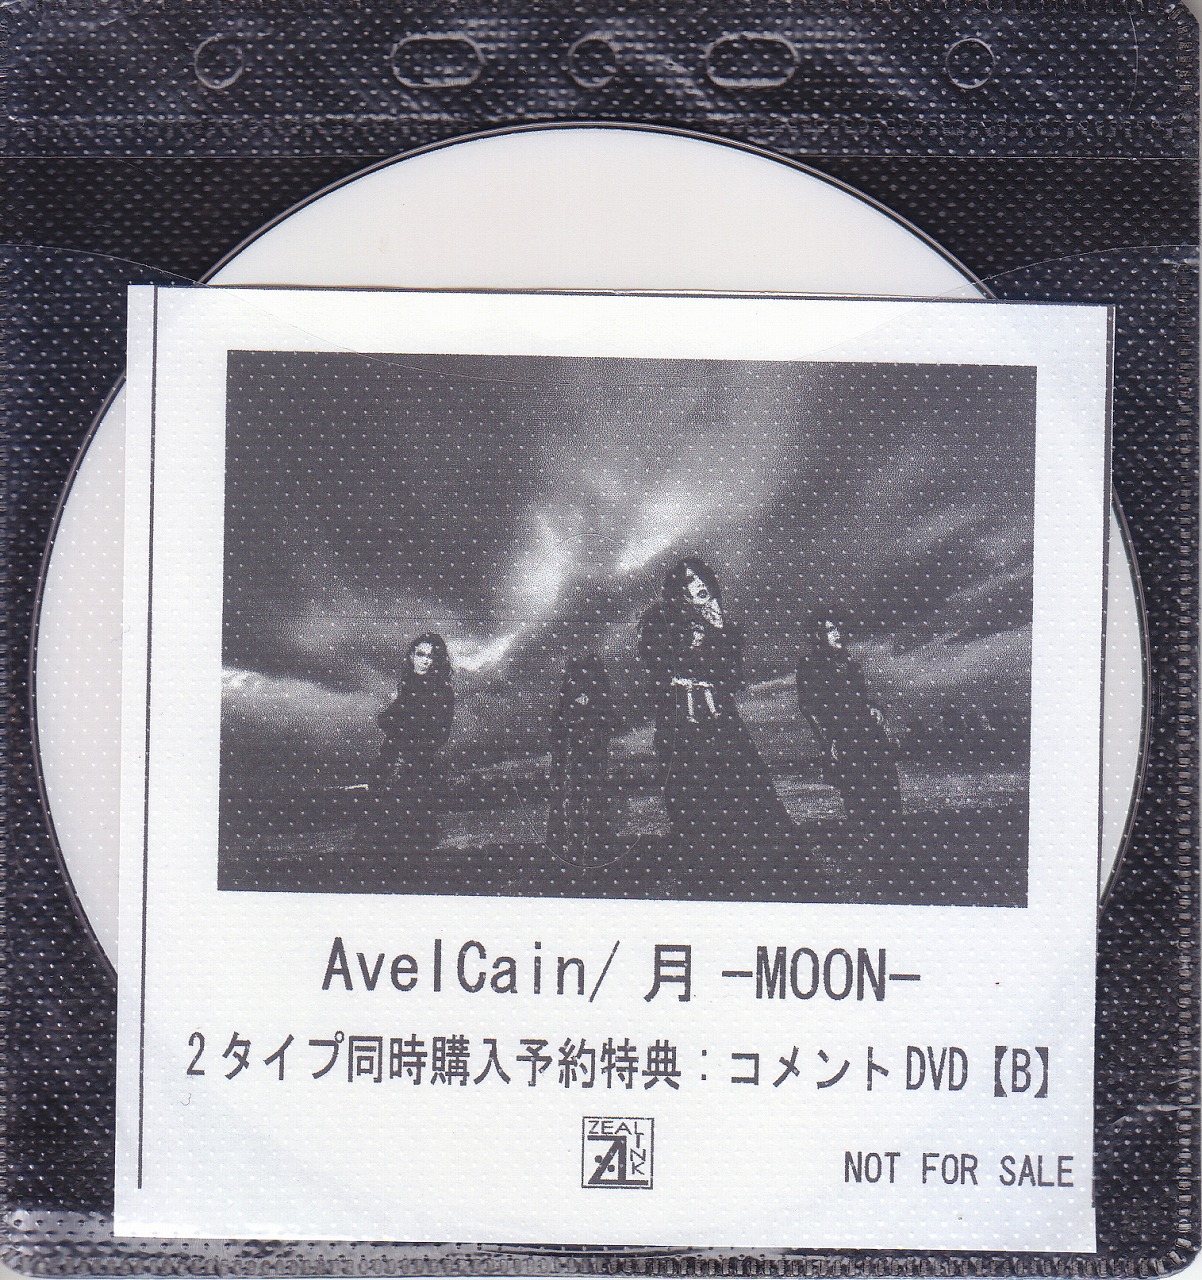 AvelCain ( アベルカイン )  の DVD 【ZEAL LINK】月-MOON- 2タイプ同時購入予約特典コメントDVD【B】